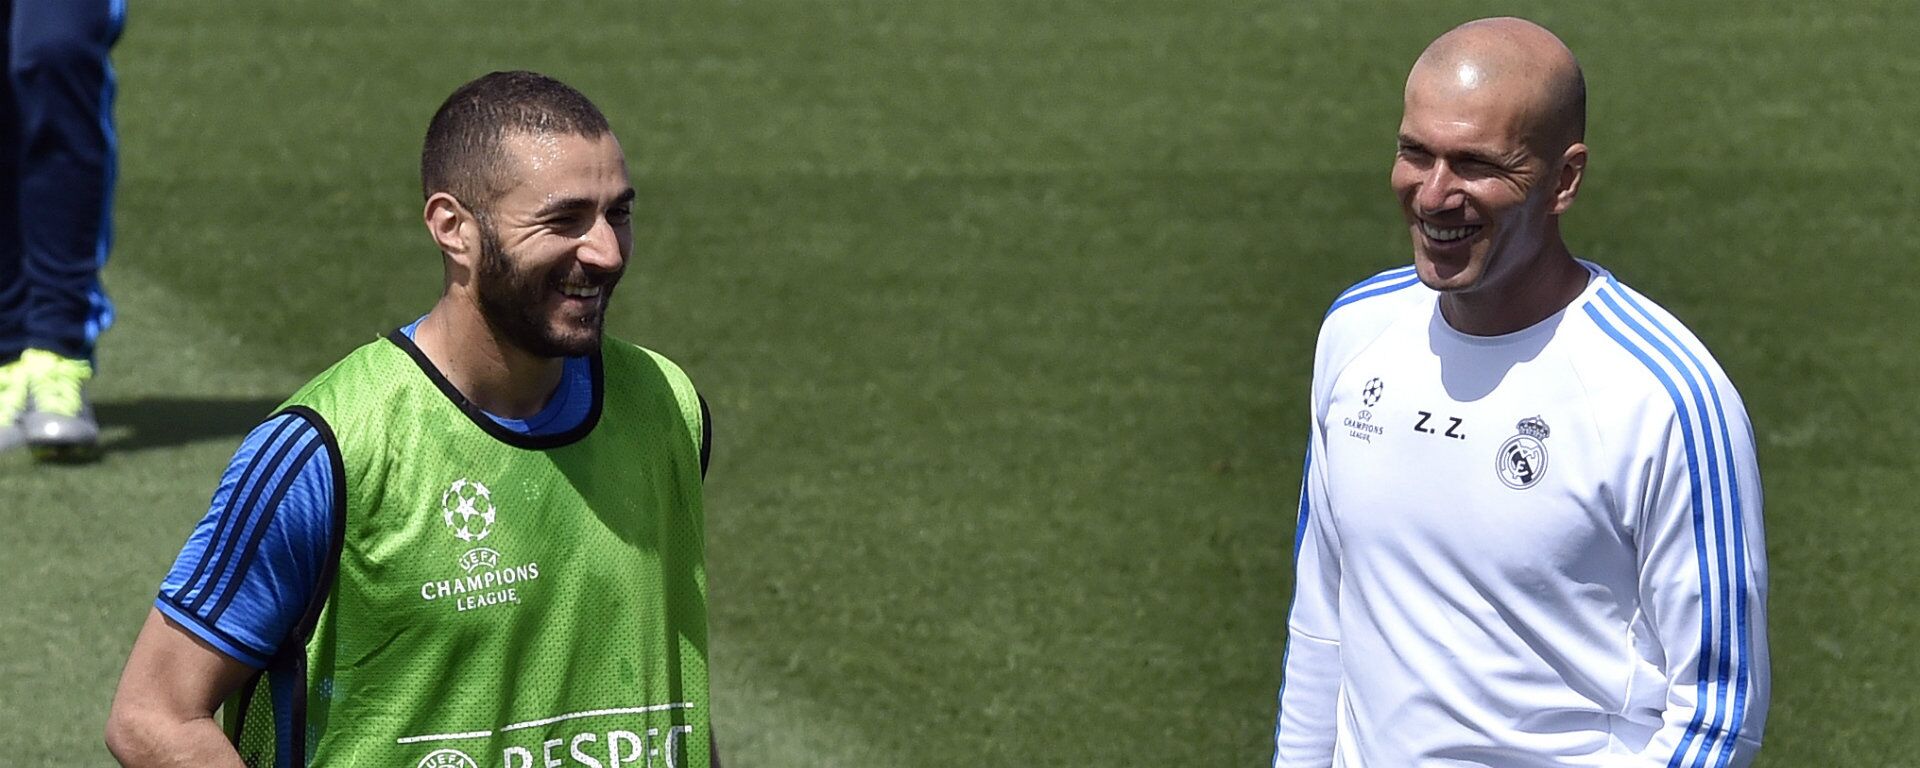 کریم بنزما مهاجم رئال مادرید  Kerim Benzema ve Zinedine Zidane - اسپوتنیک افغانستان  , 1920, 19.02.2021